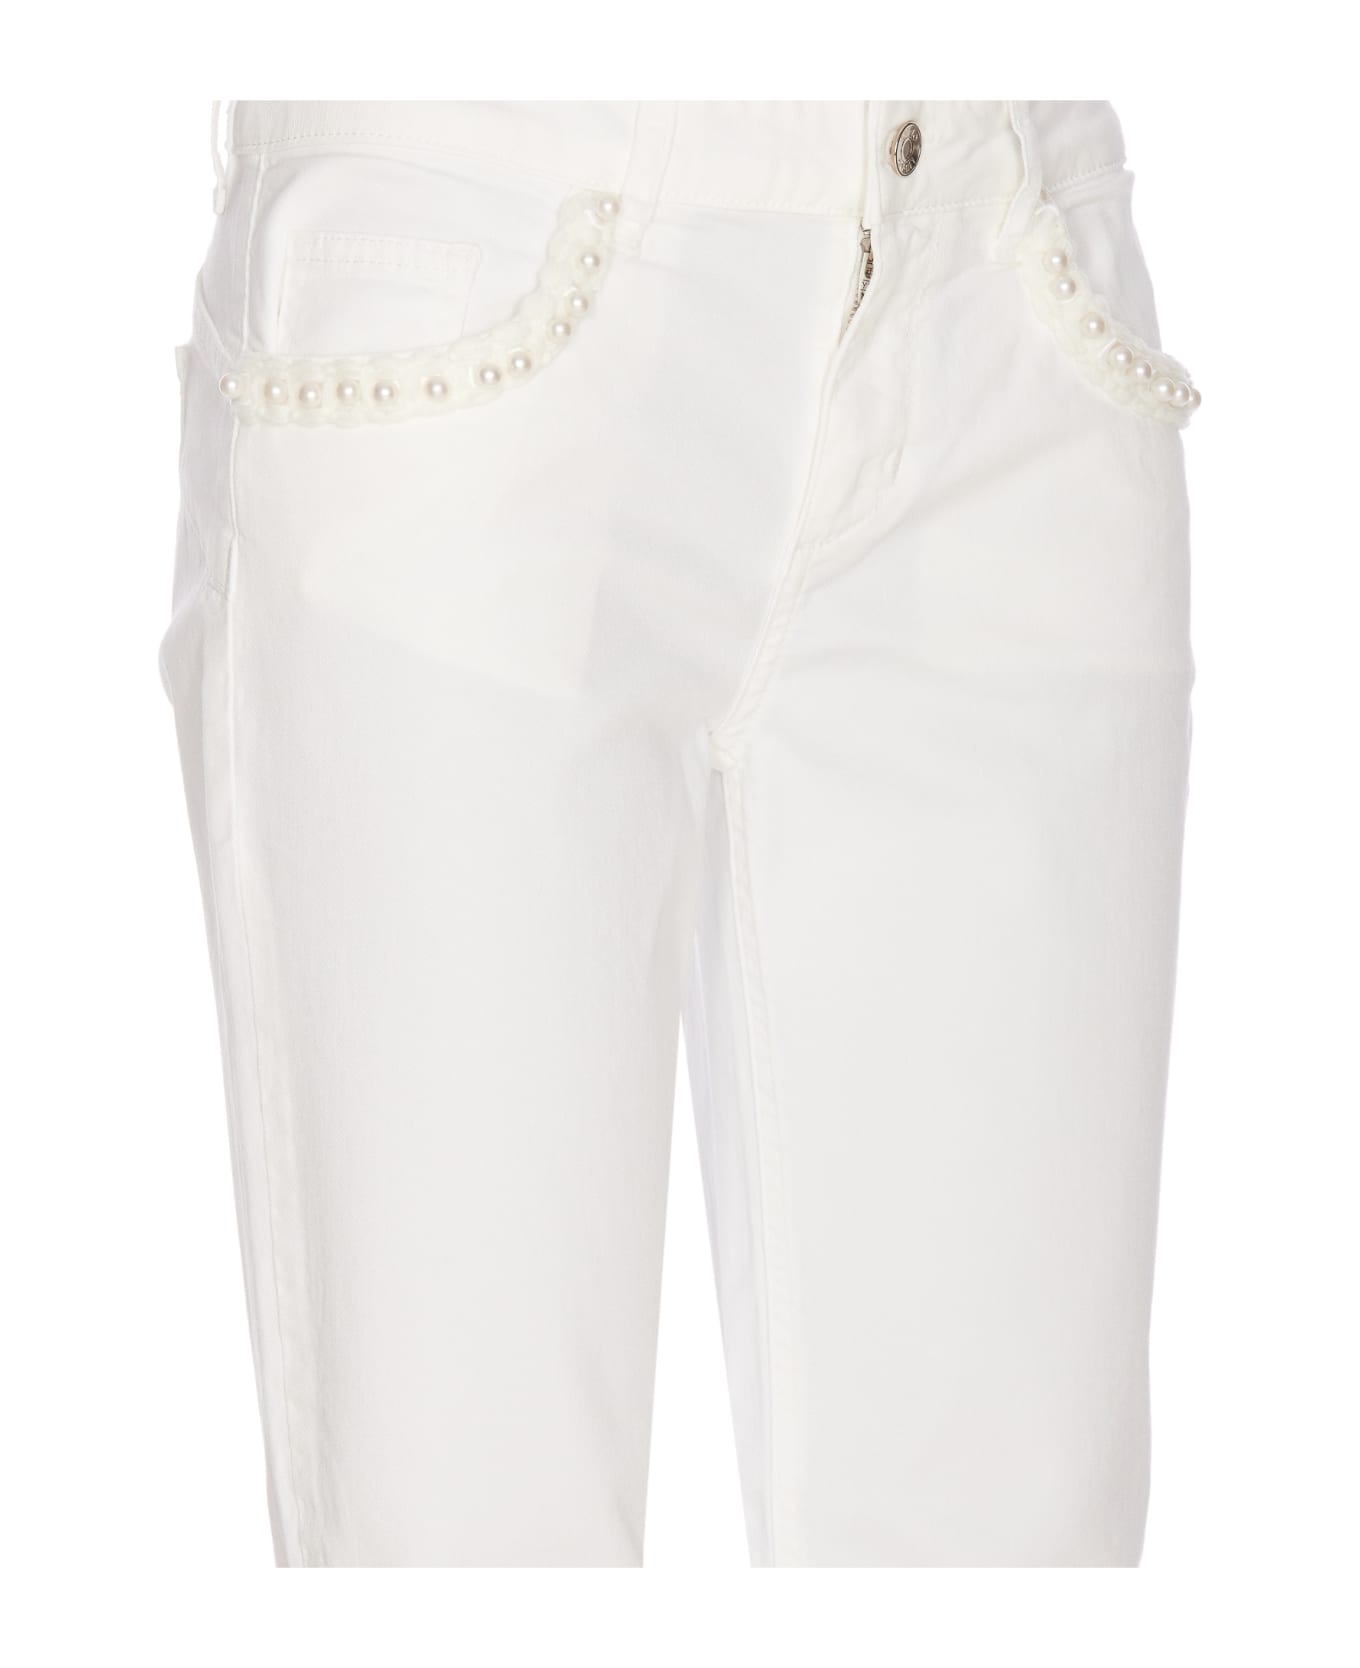 Liu-Jo Bottom Up Pearls Jeans - White